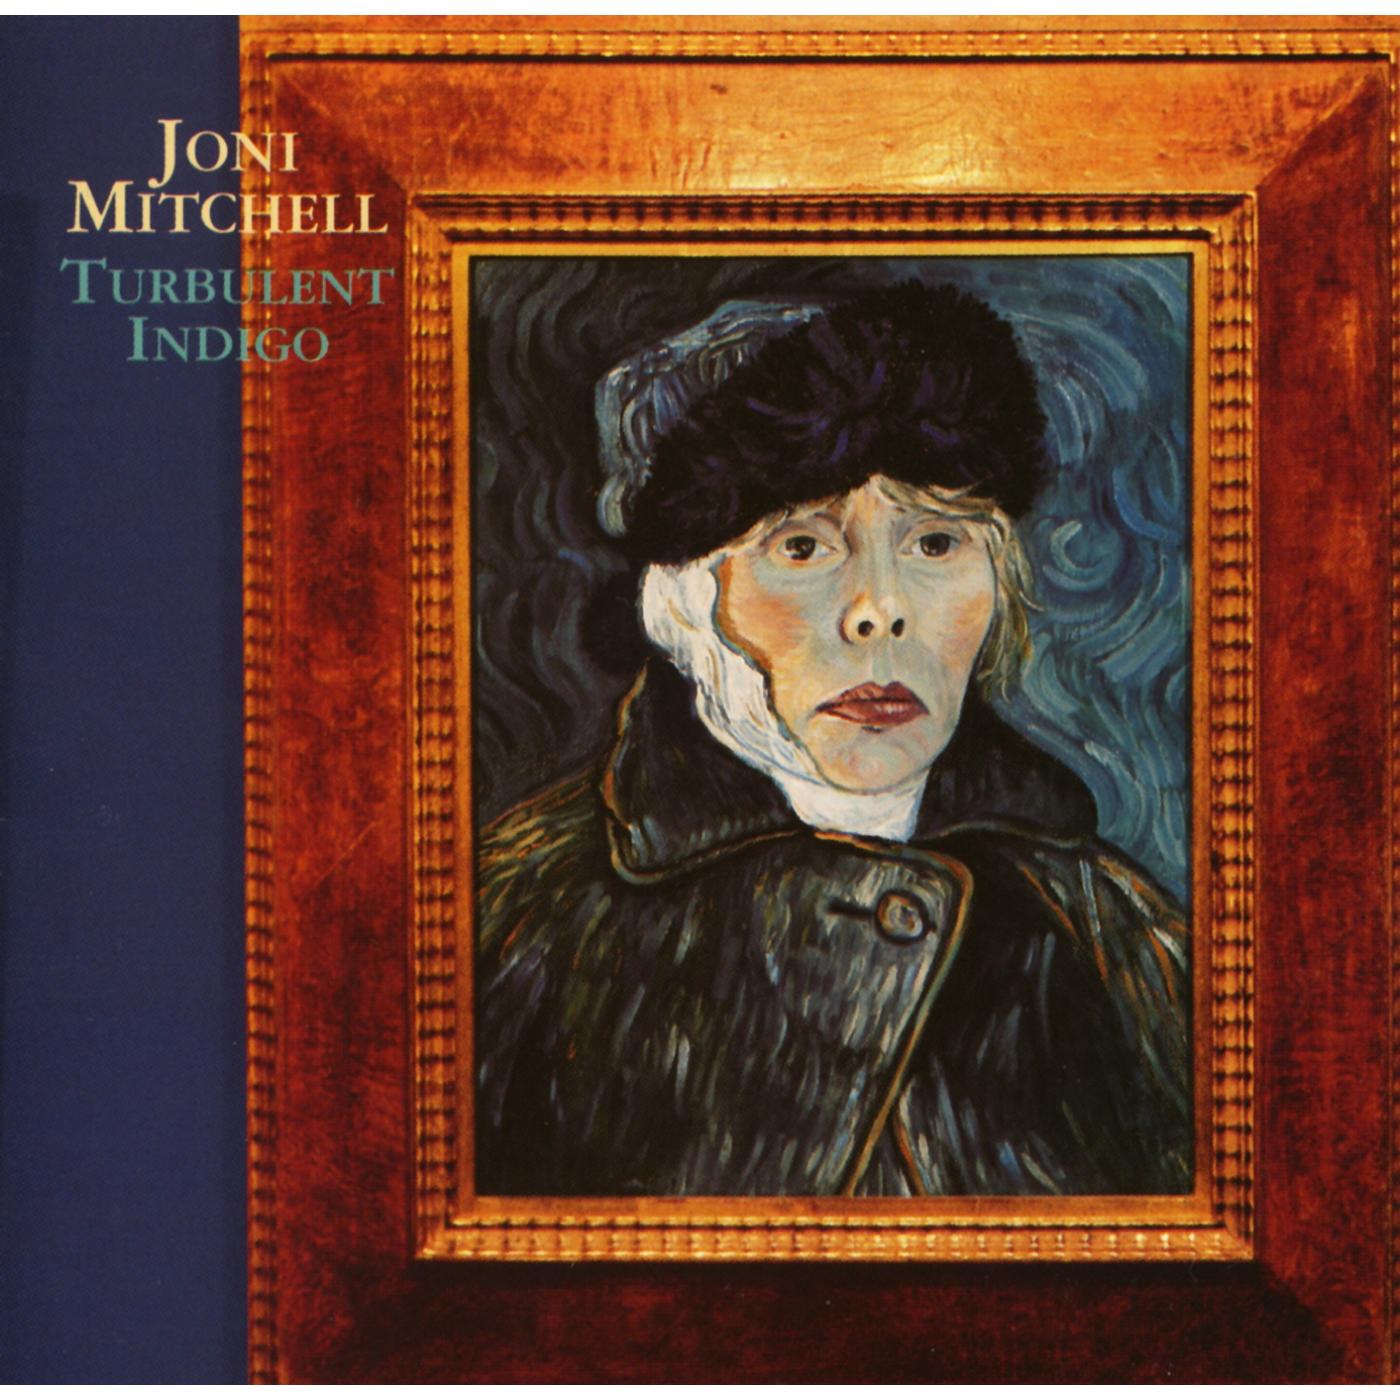 Joni Mitchell Album Reviews